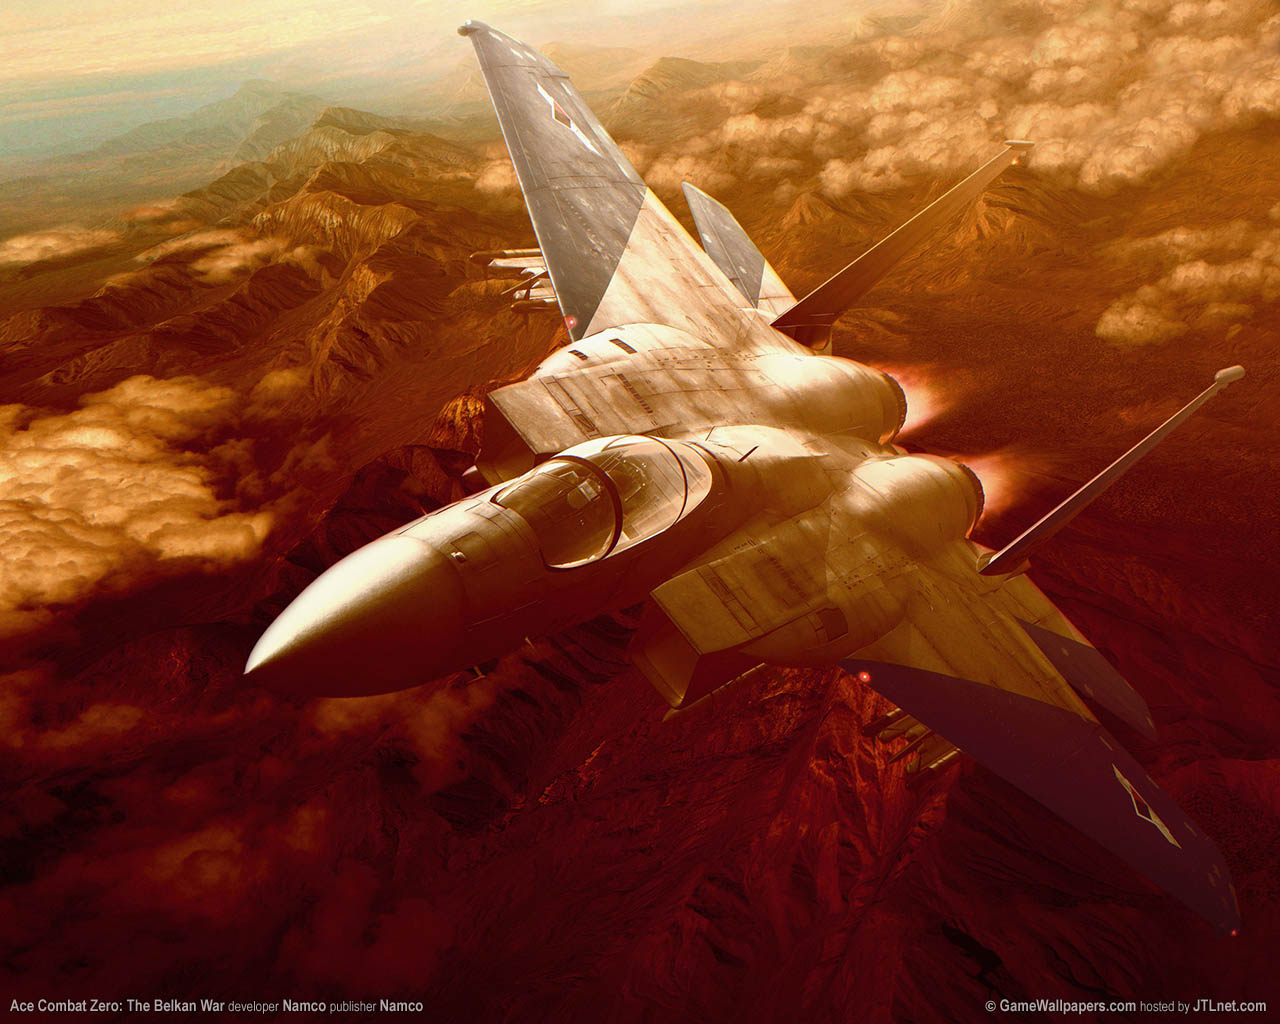 Foton Ace Combat Ace Combat 5: The Unsung War dataspel spel Datorspel